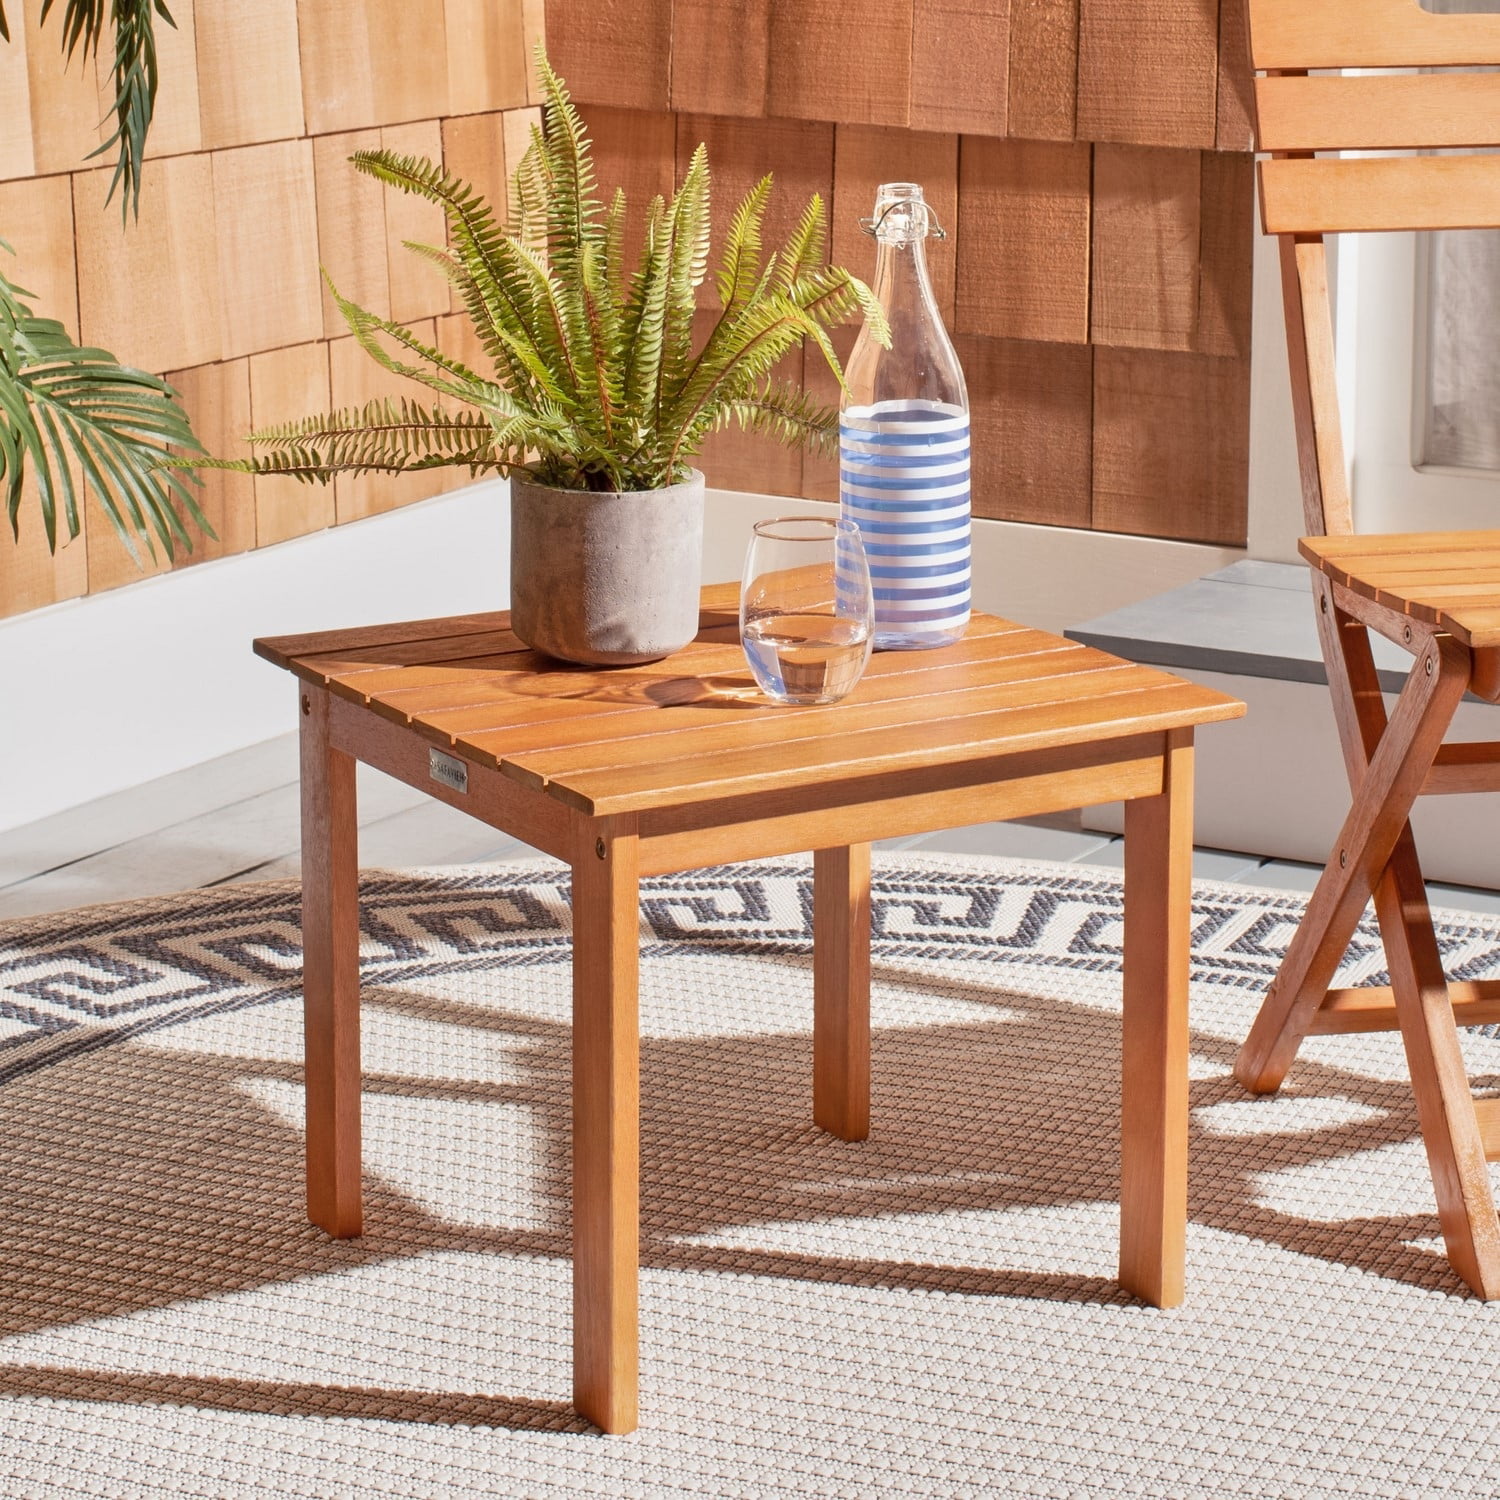 safavieh randor outdoor patio folding table - natural - walmart